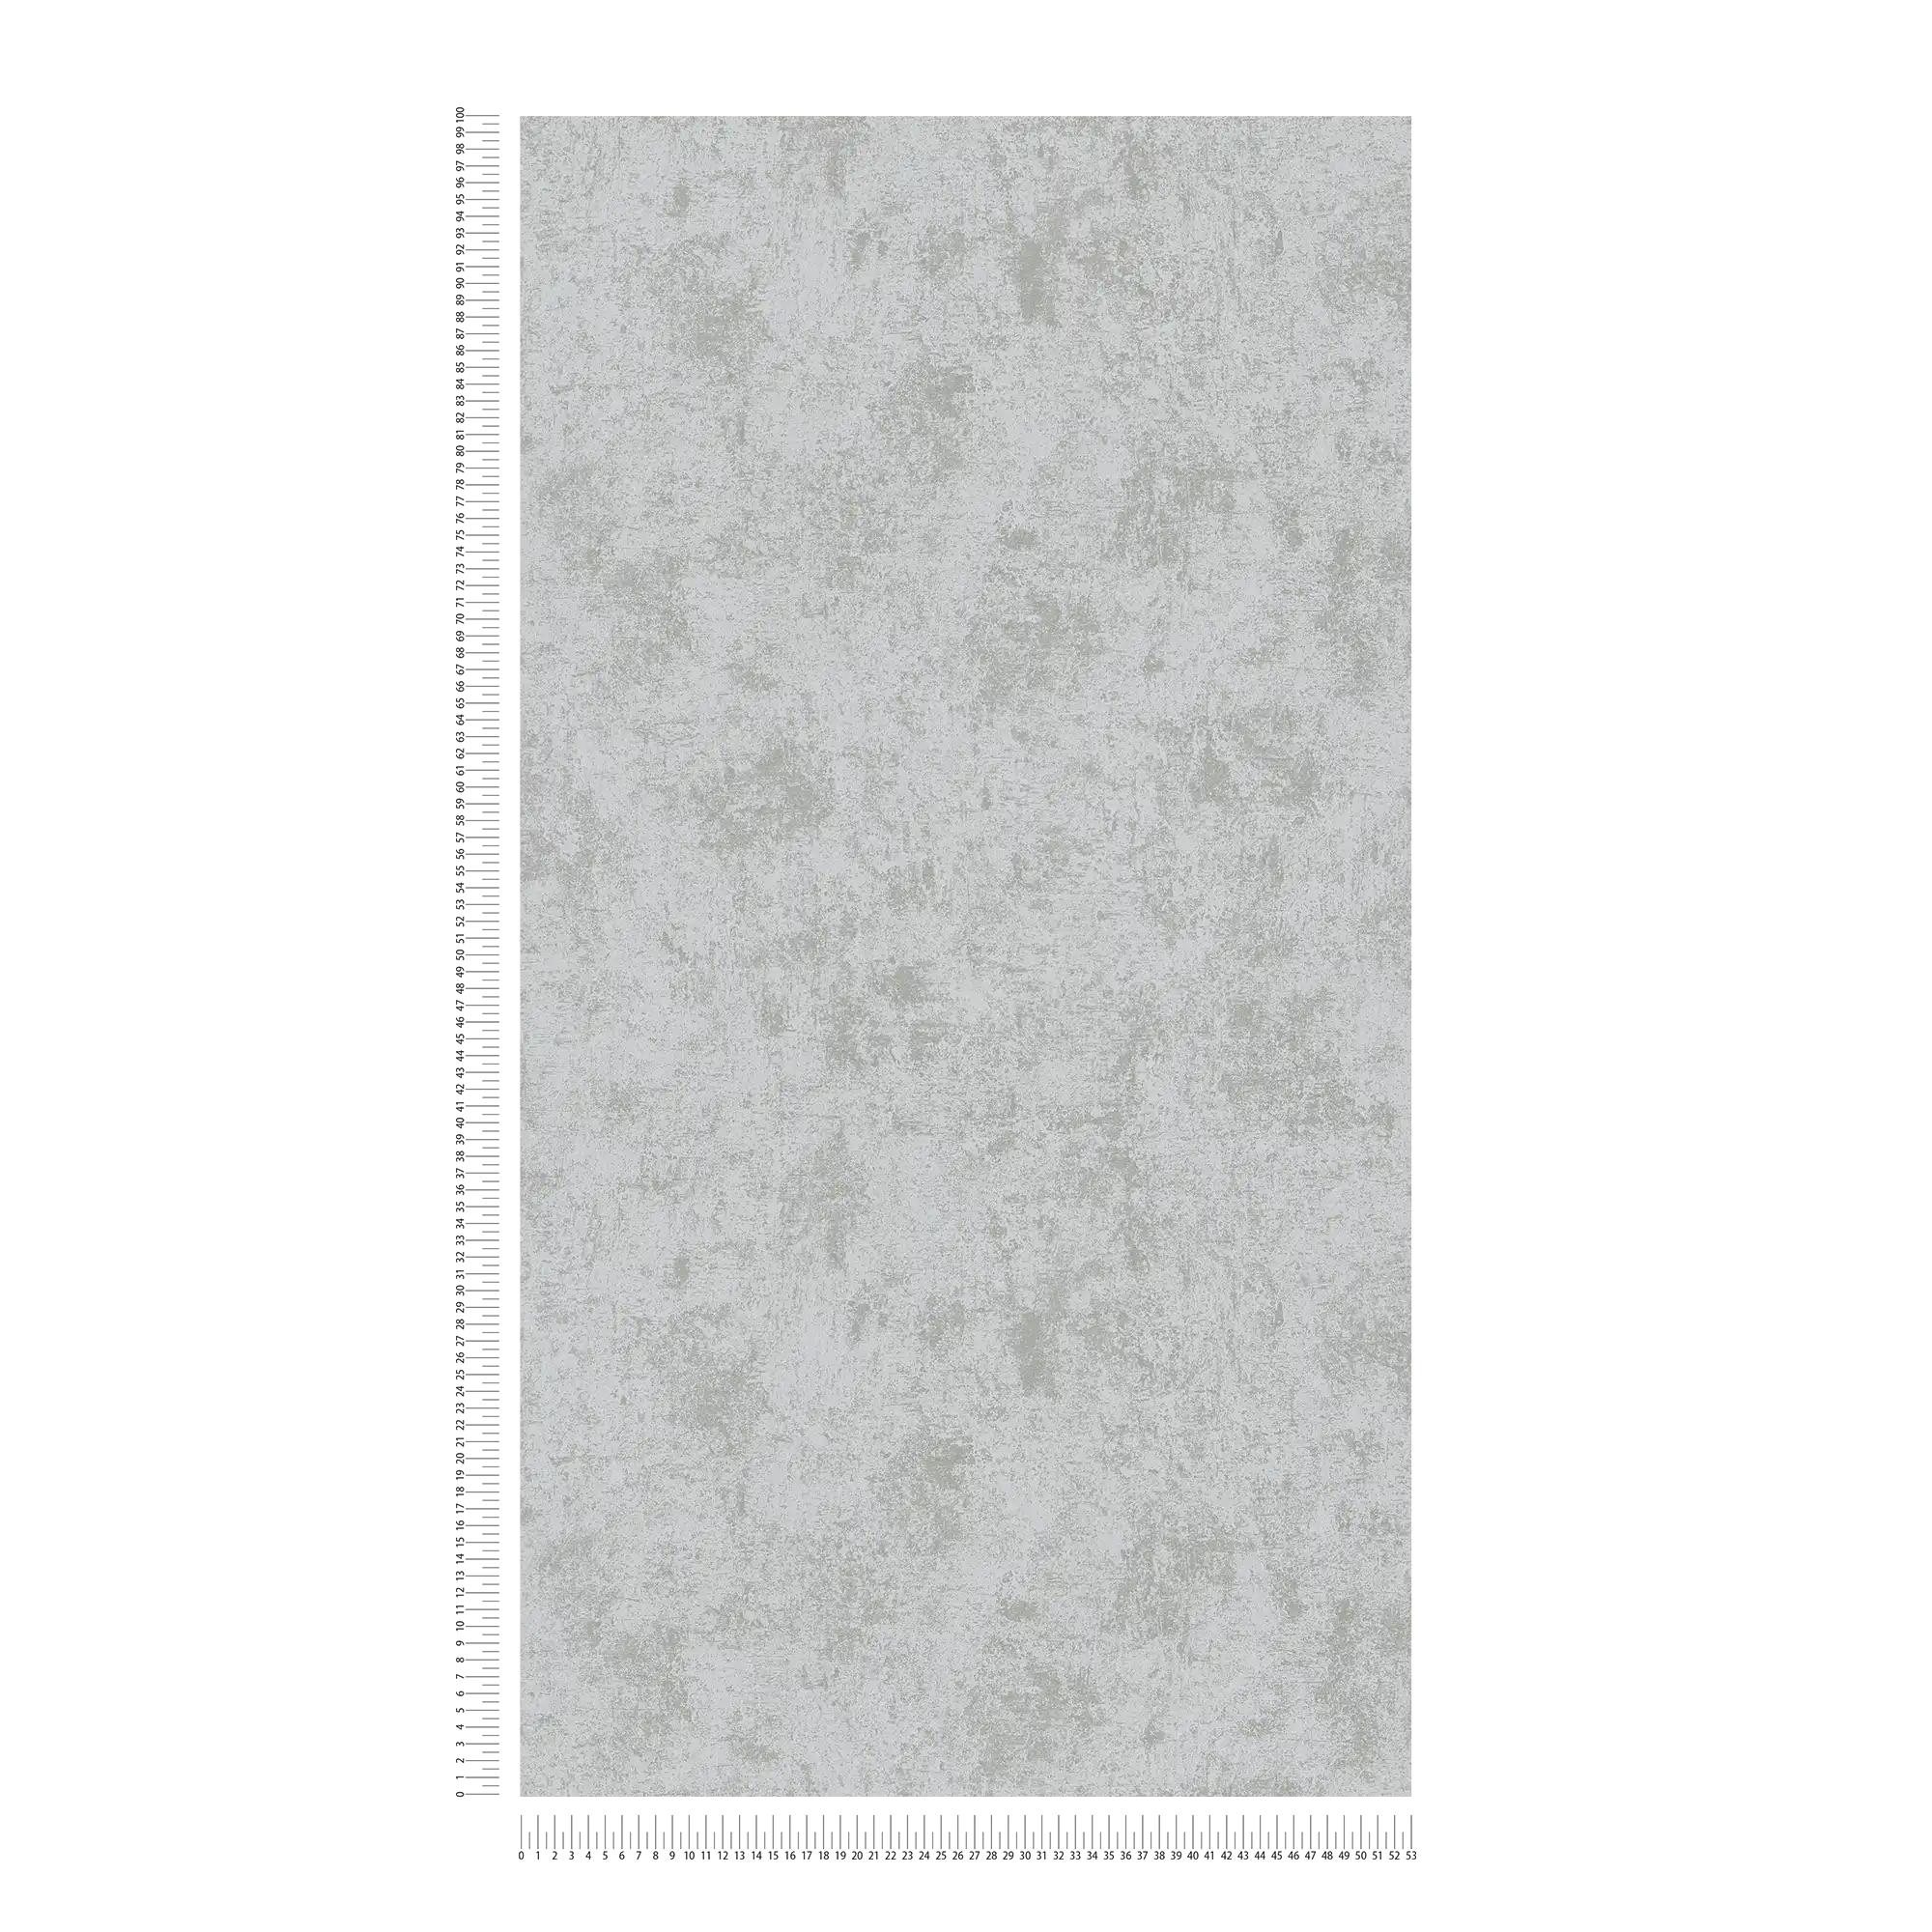             Metal-effect wallpaper smooth glossy - silver, grey, metallic
        